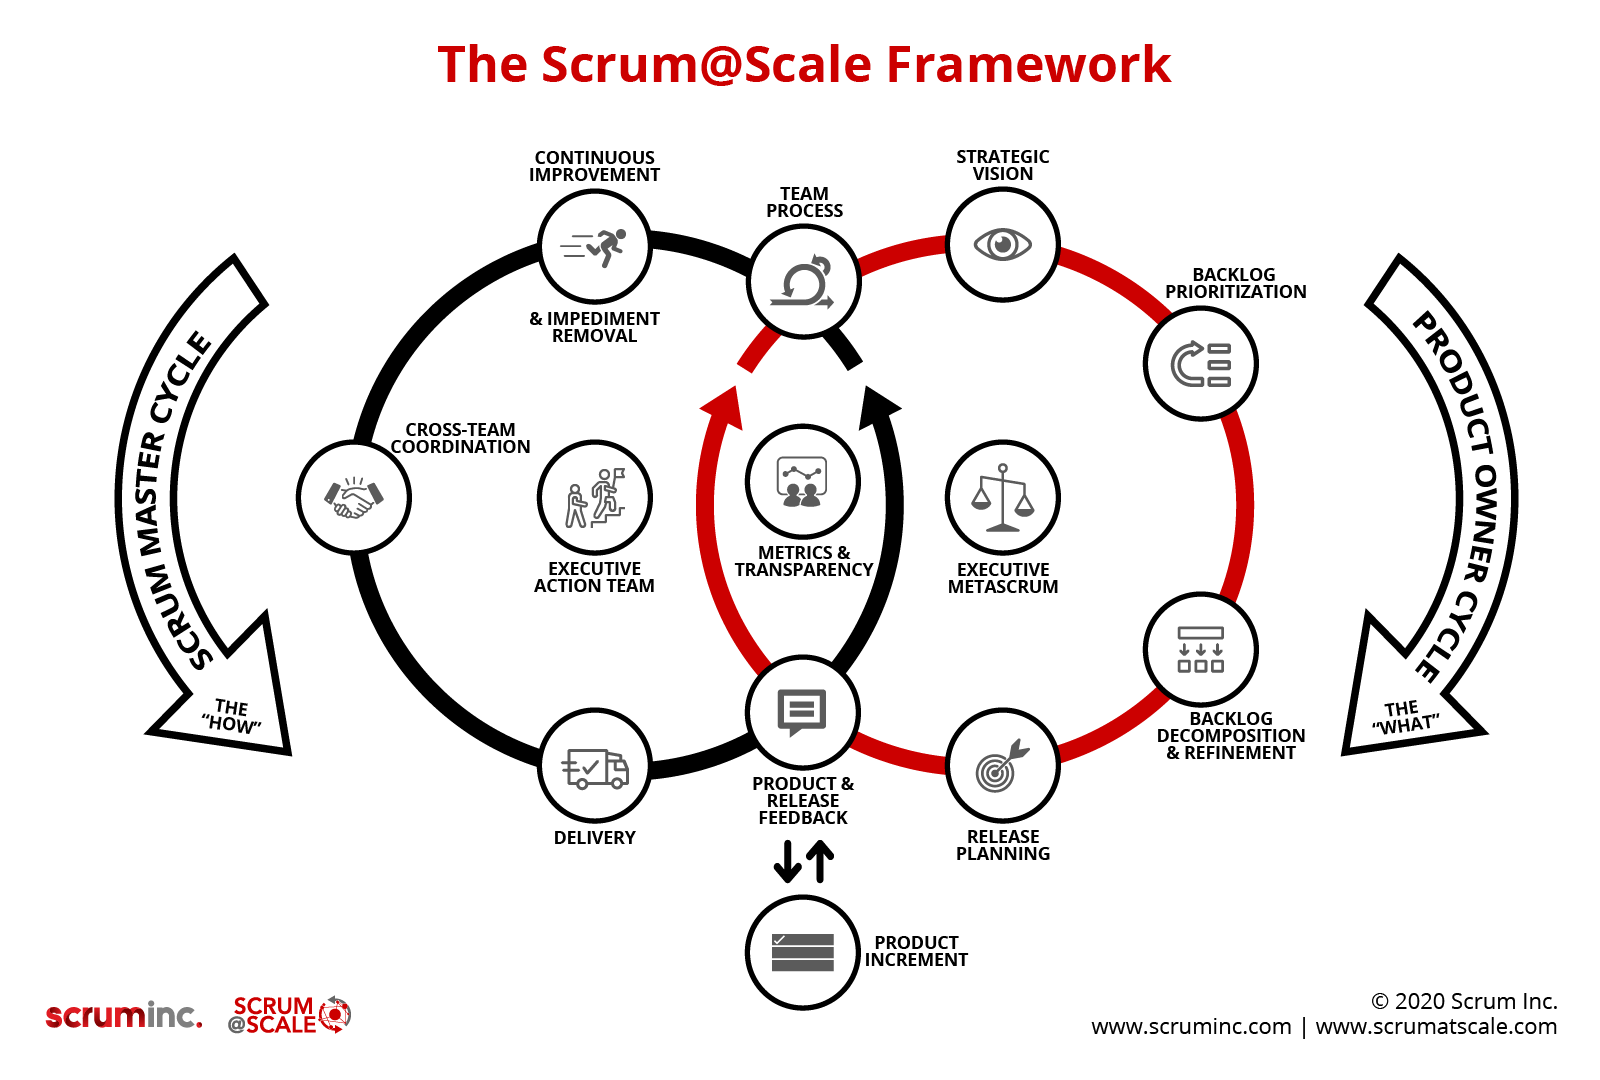 The Scrum at Scale Framework